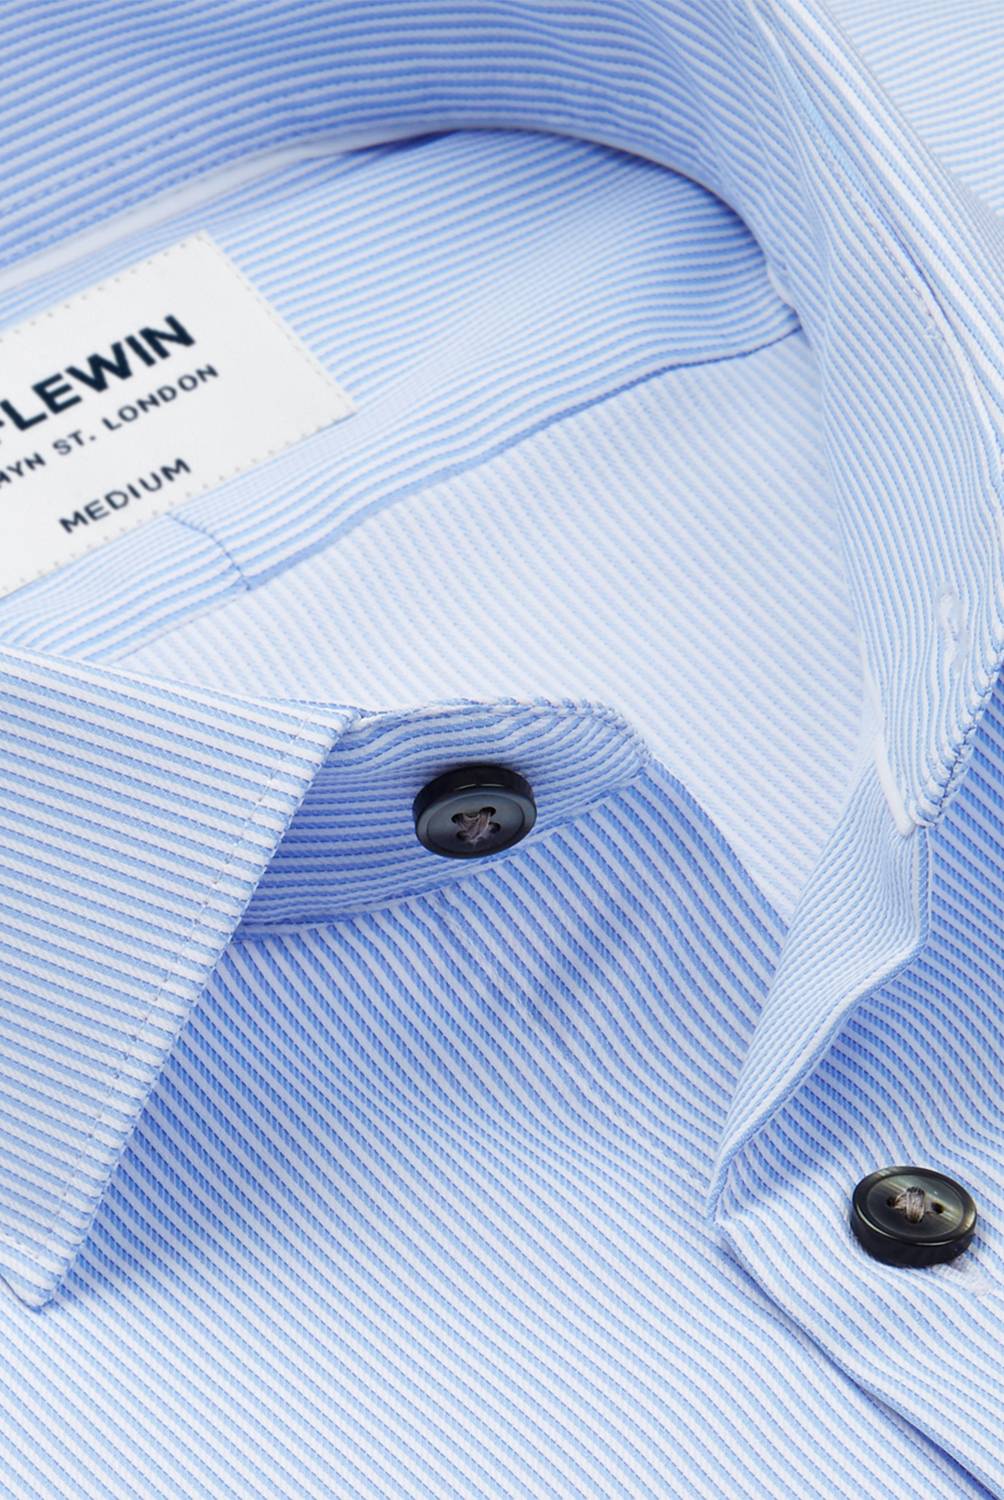 TM LEWIN - Camisa de vestir Hombre